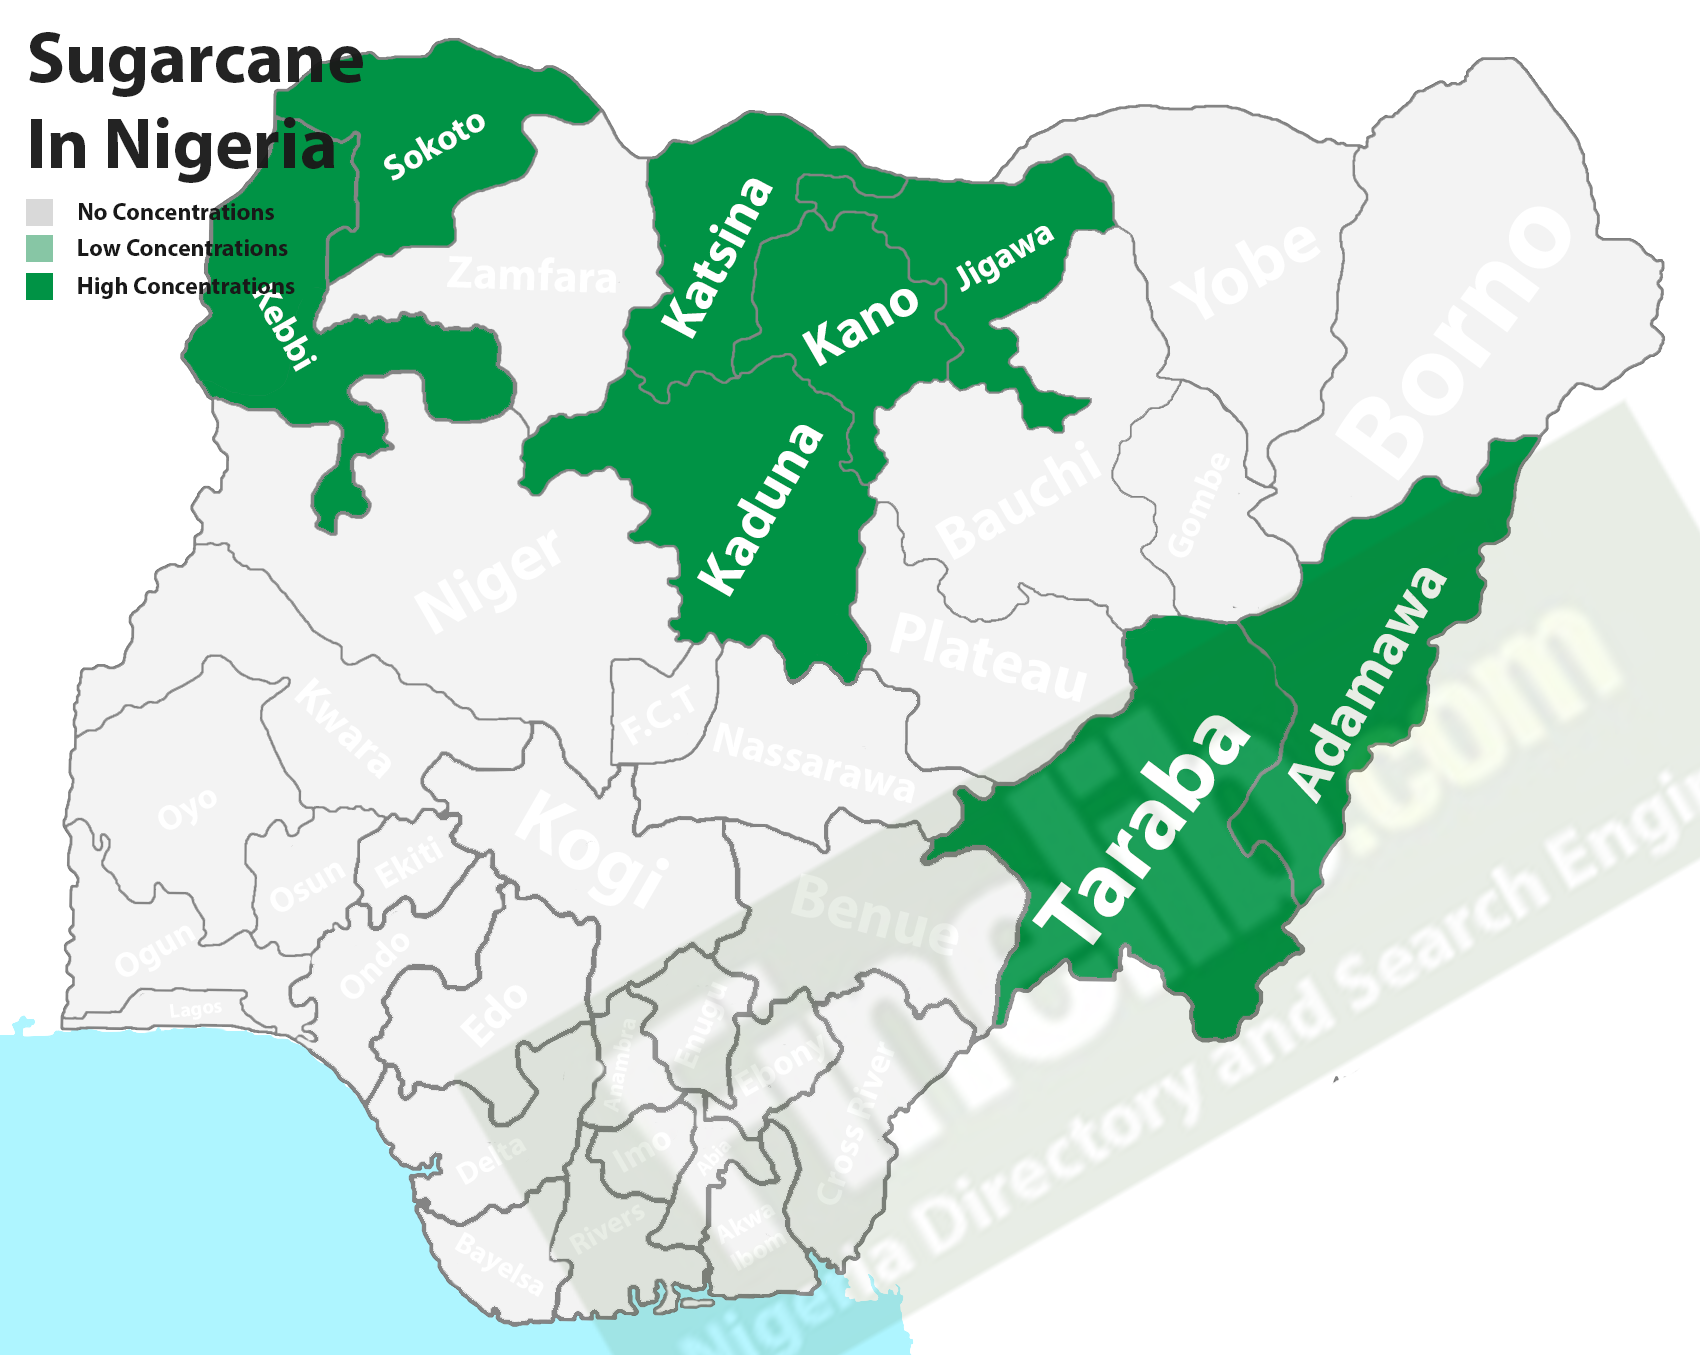 Sugarcane producing states in Nigeria